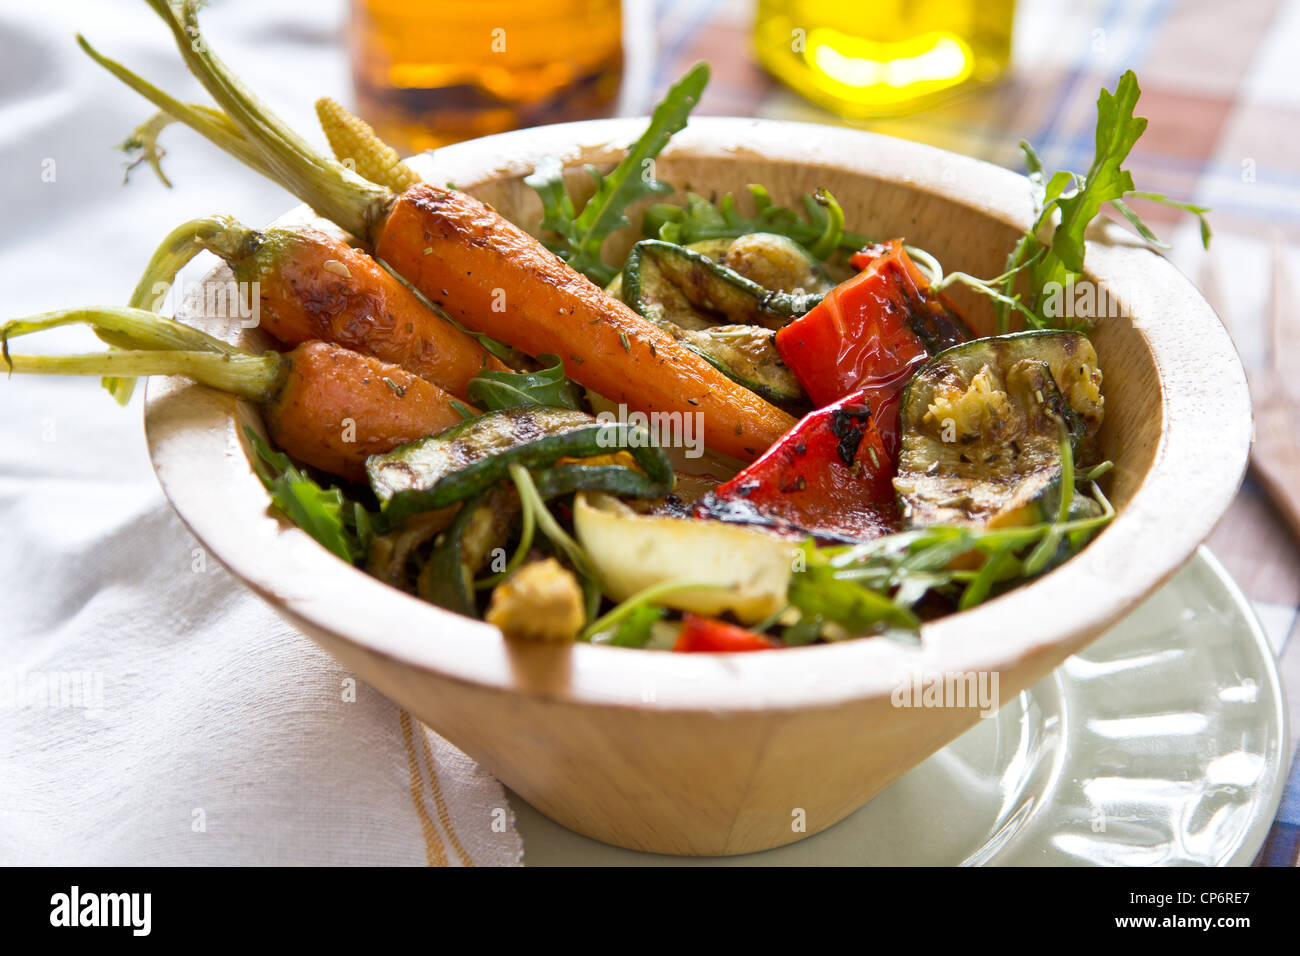 Grilled vegetables salad Stock Photo